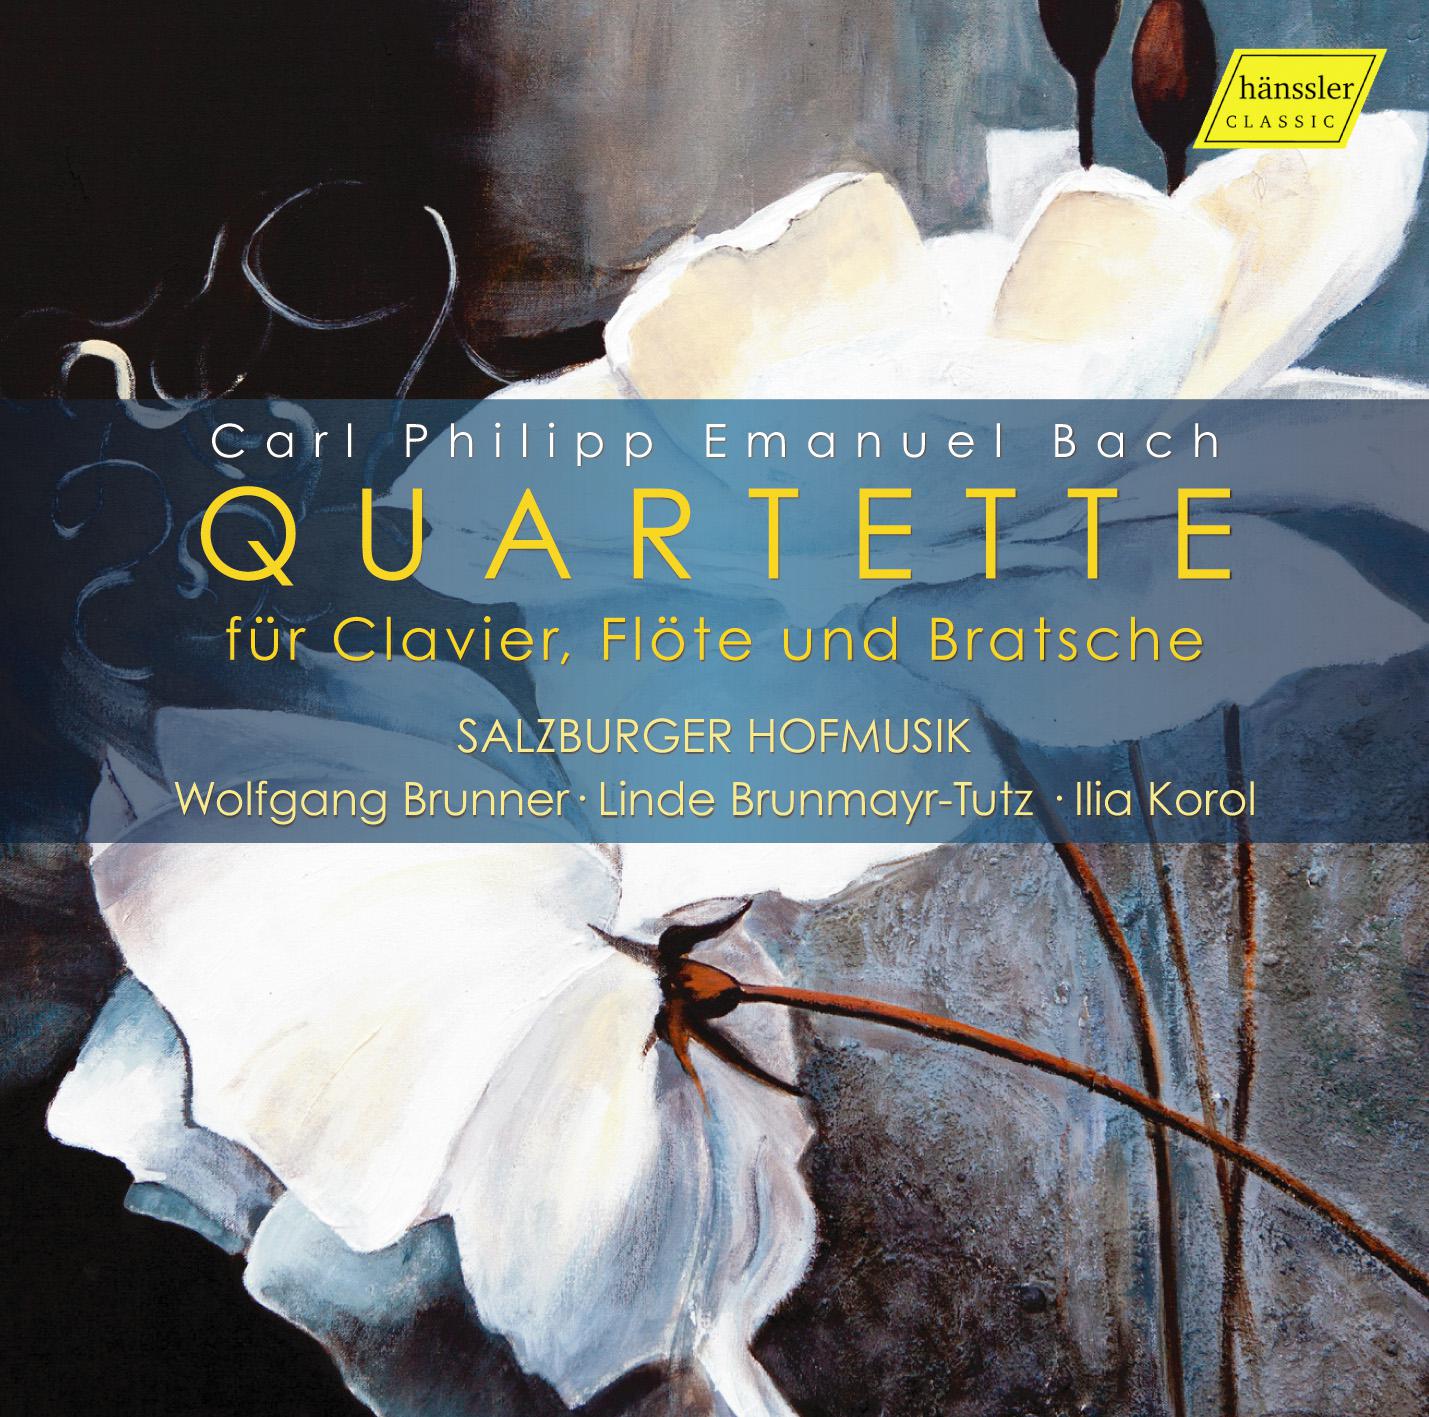 Quartette for Keyboard, Flute & Viola in G Major, Wq. 95: III. Presto